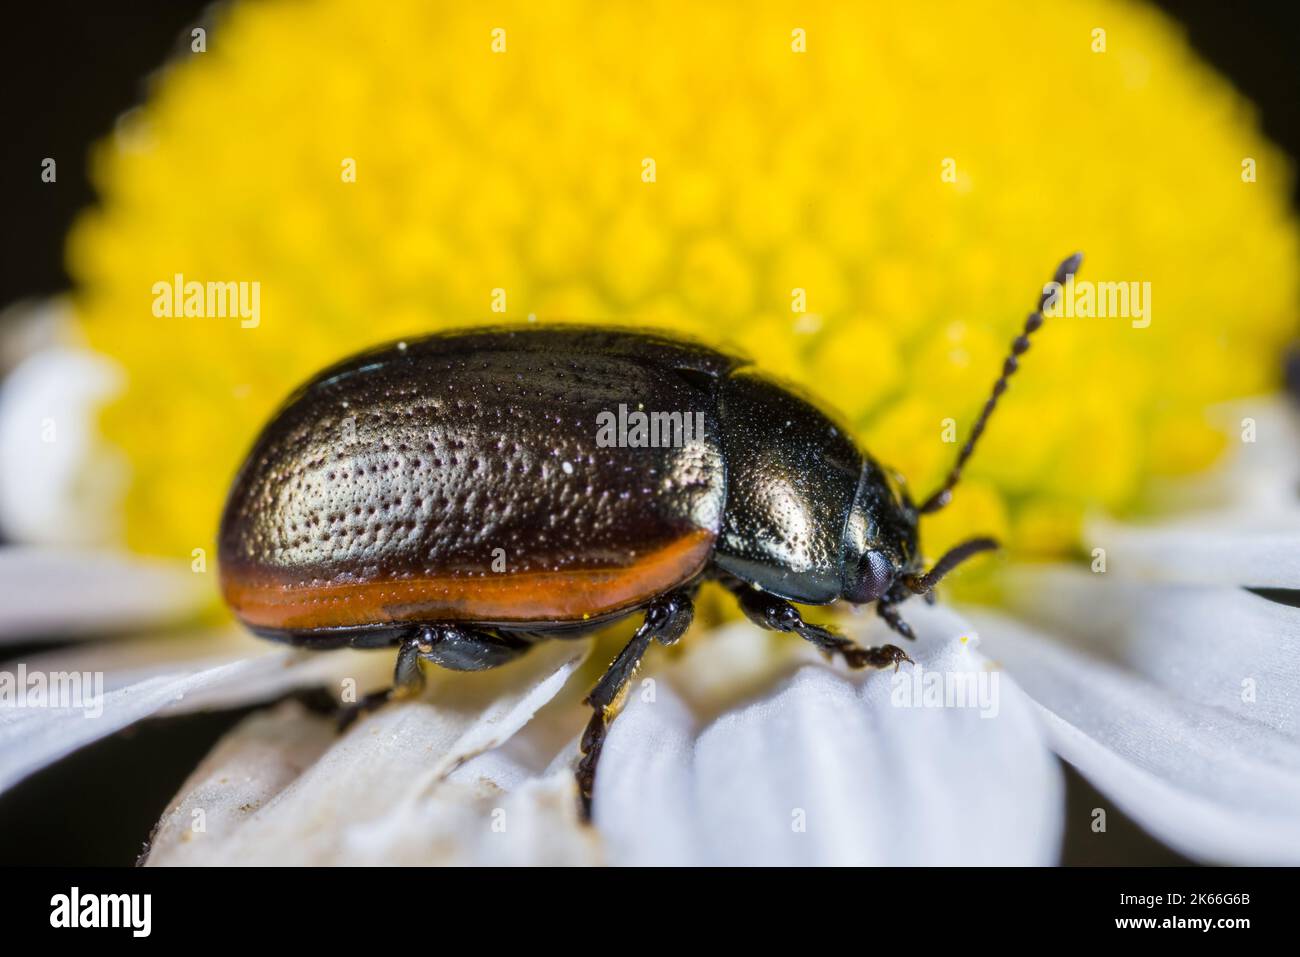 Leaf beetle, Leaf-beetle (Chrysolina marginata), sitting on an ox-eye daisy, side view, Germany Stock Photo